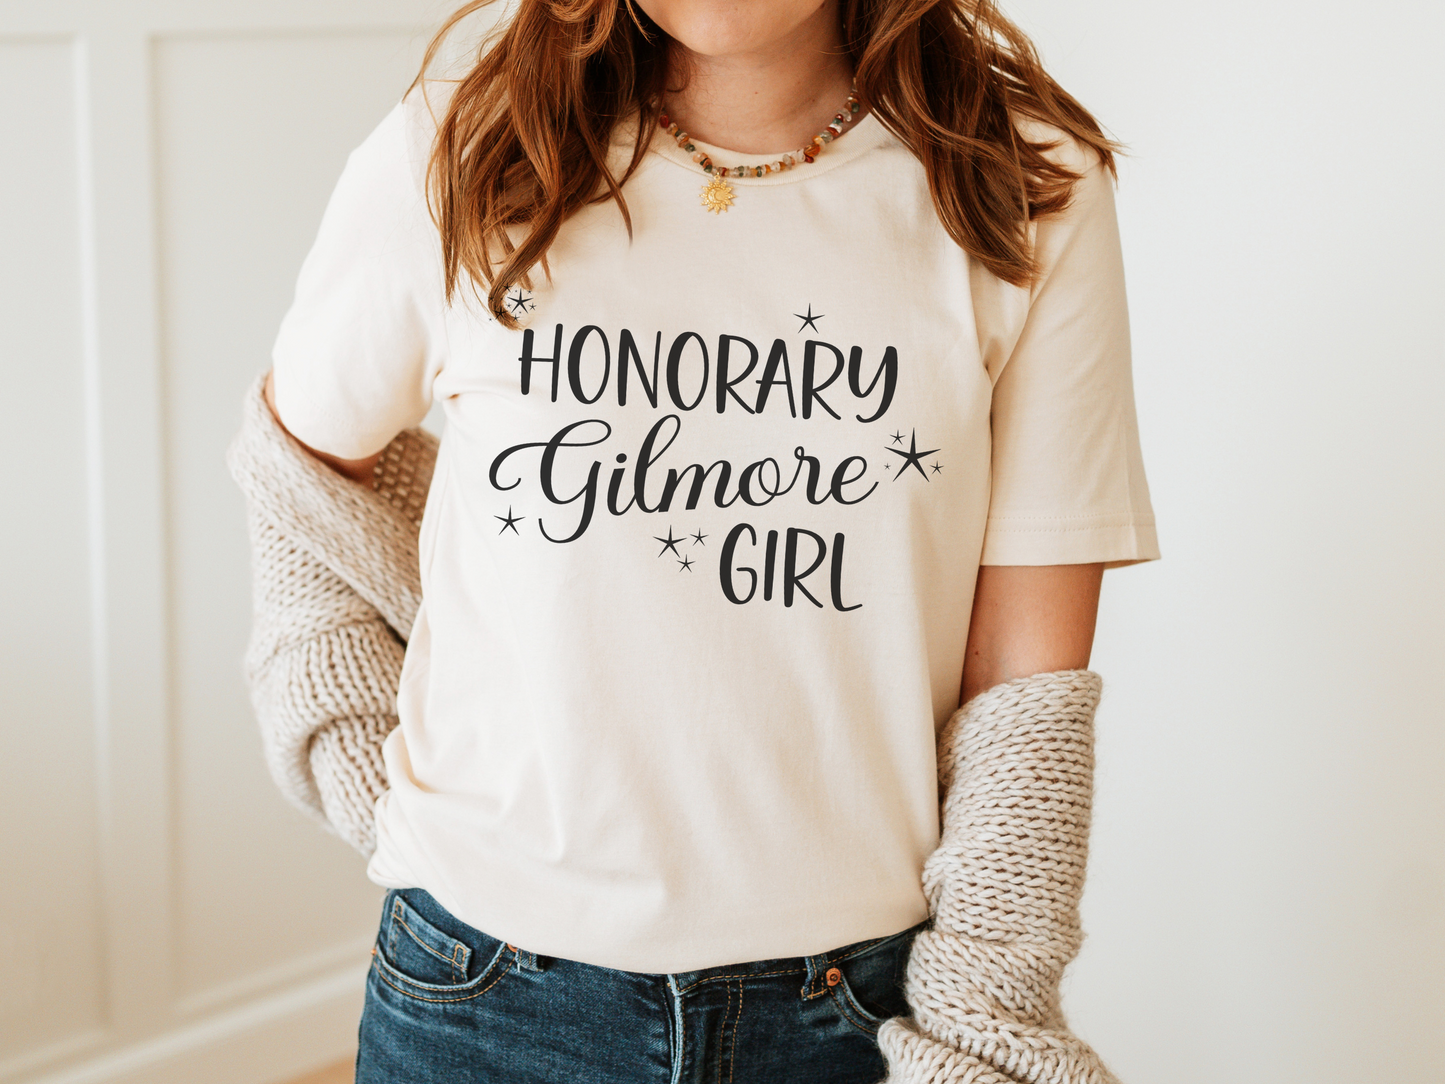 Honorary Gilmore Girl